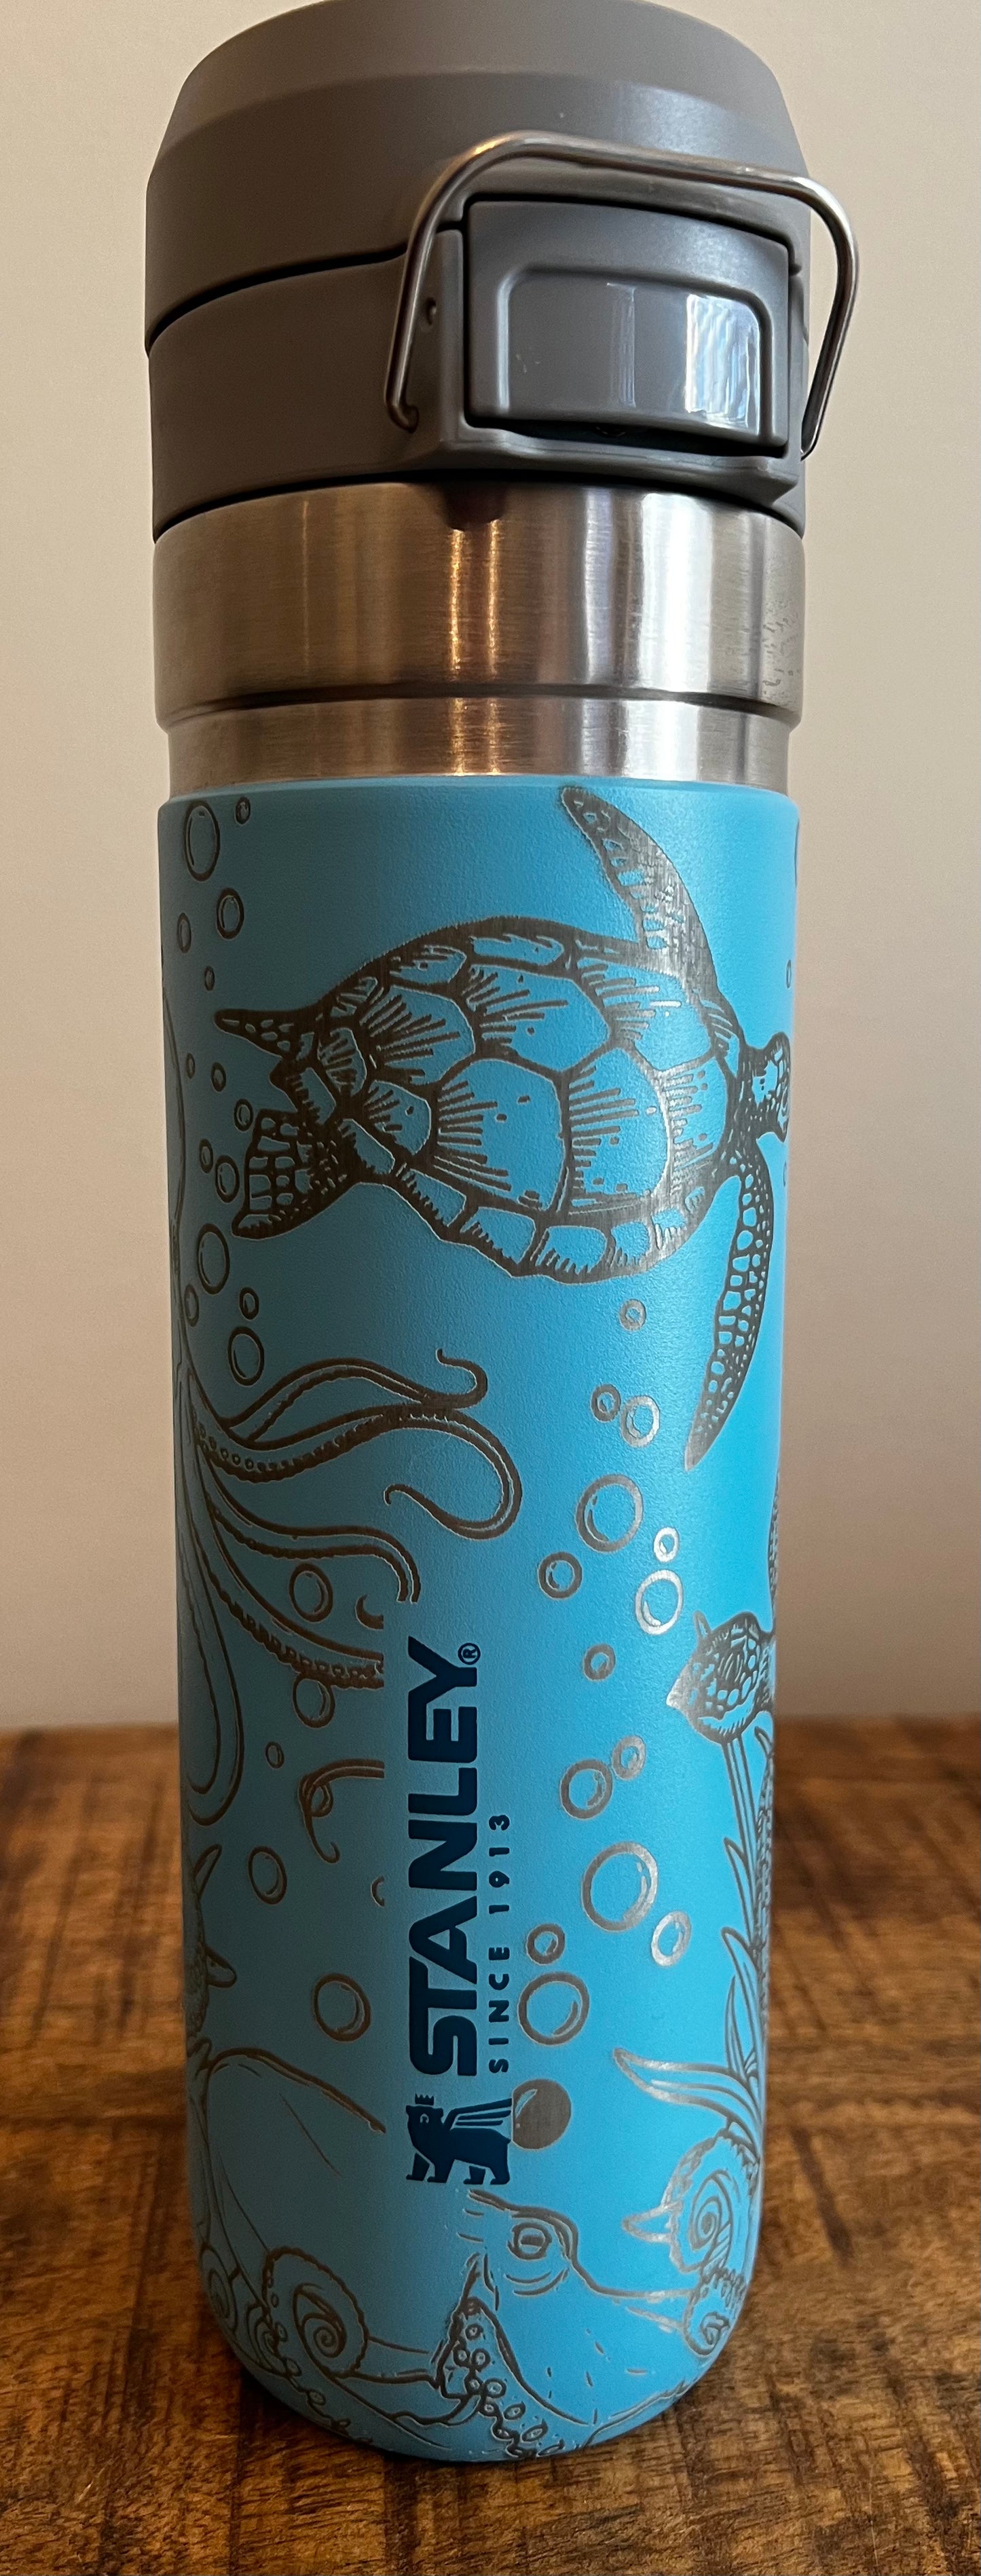 Ocean Life 24oz go bottle fully engraved  with ocean life theme